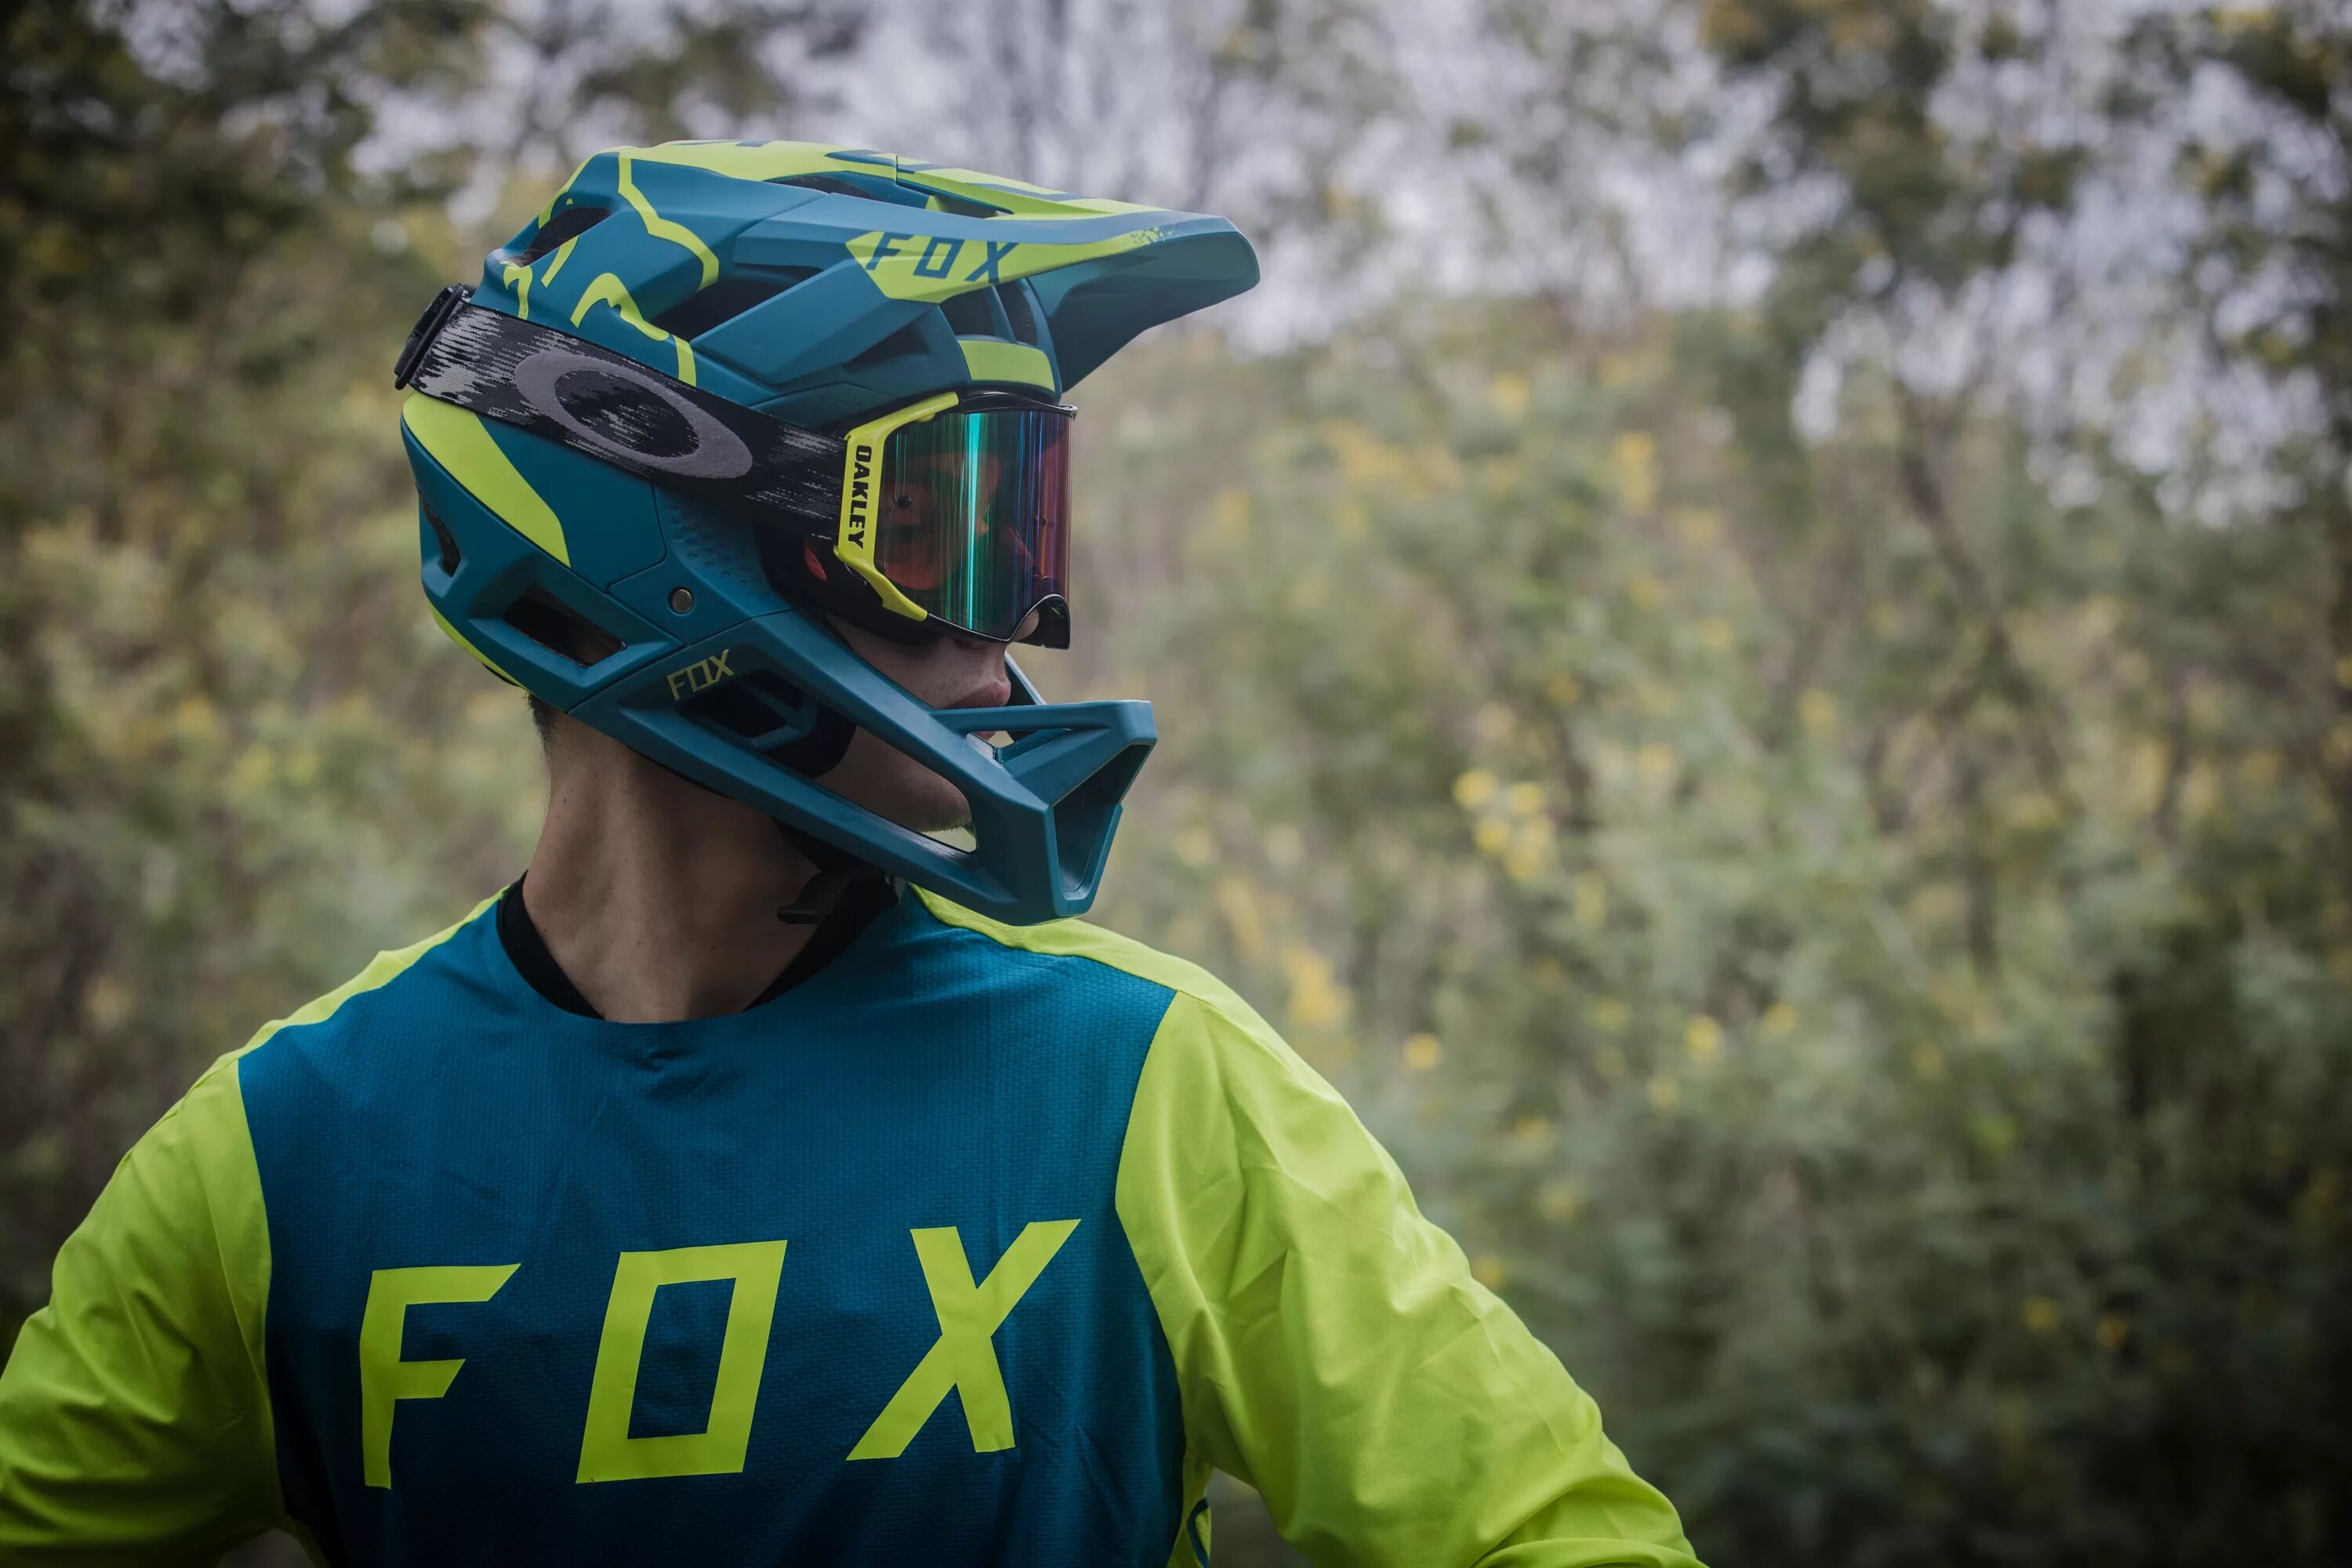 Шлем Fox Proframe. Fox Vapor шлем Proframe. Full face Fox Helmet Proframe. Велошлем Fox Proframe Moth Helmet.